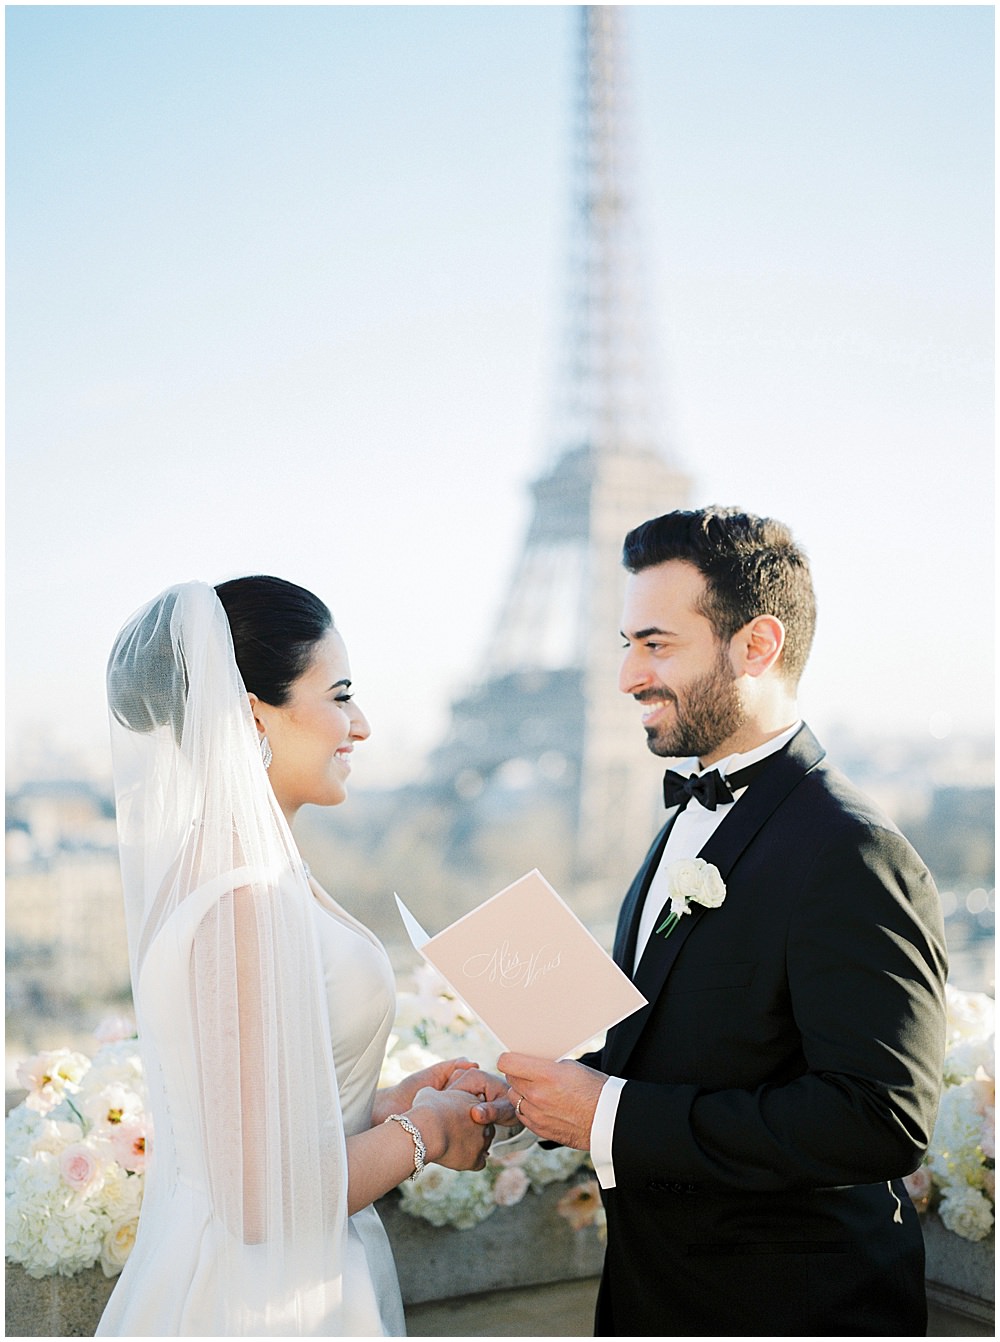 Top 10 Paris Wedding Photography Locations, shangrila hotel paris, paris balcony photoshoot, 